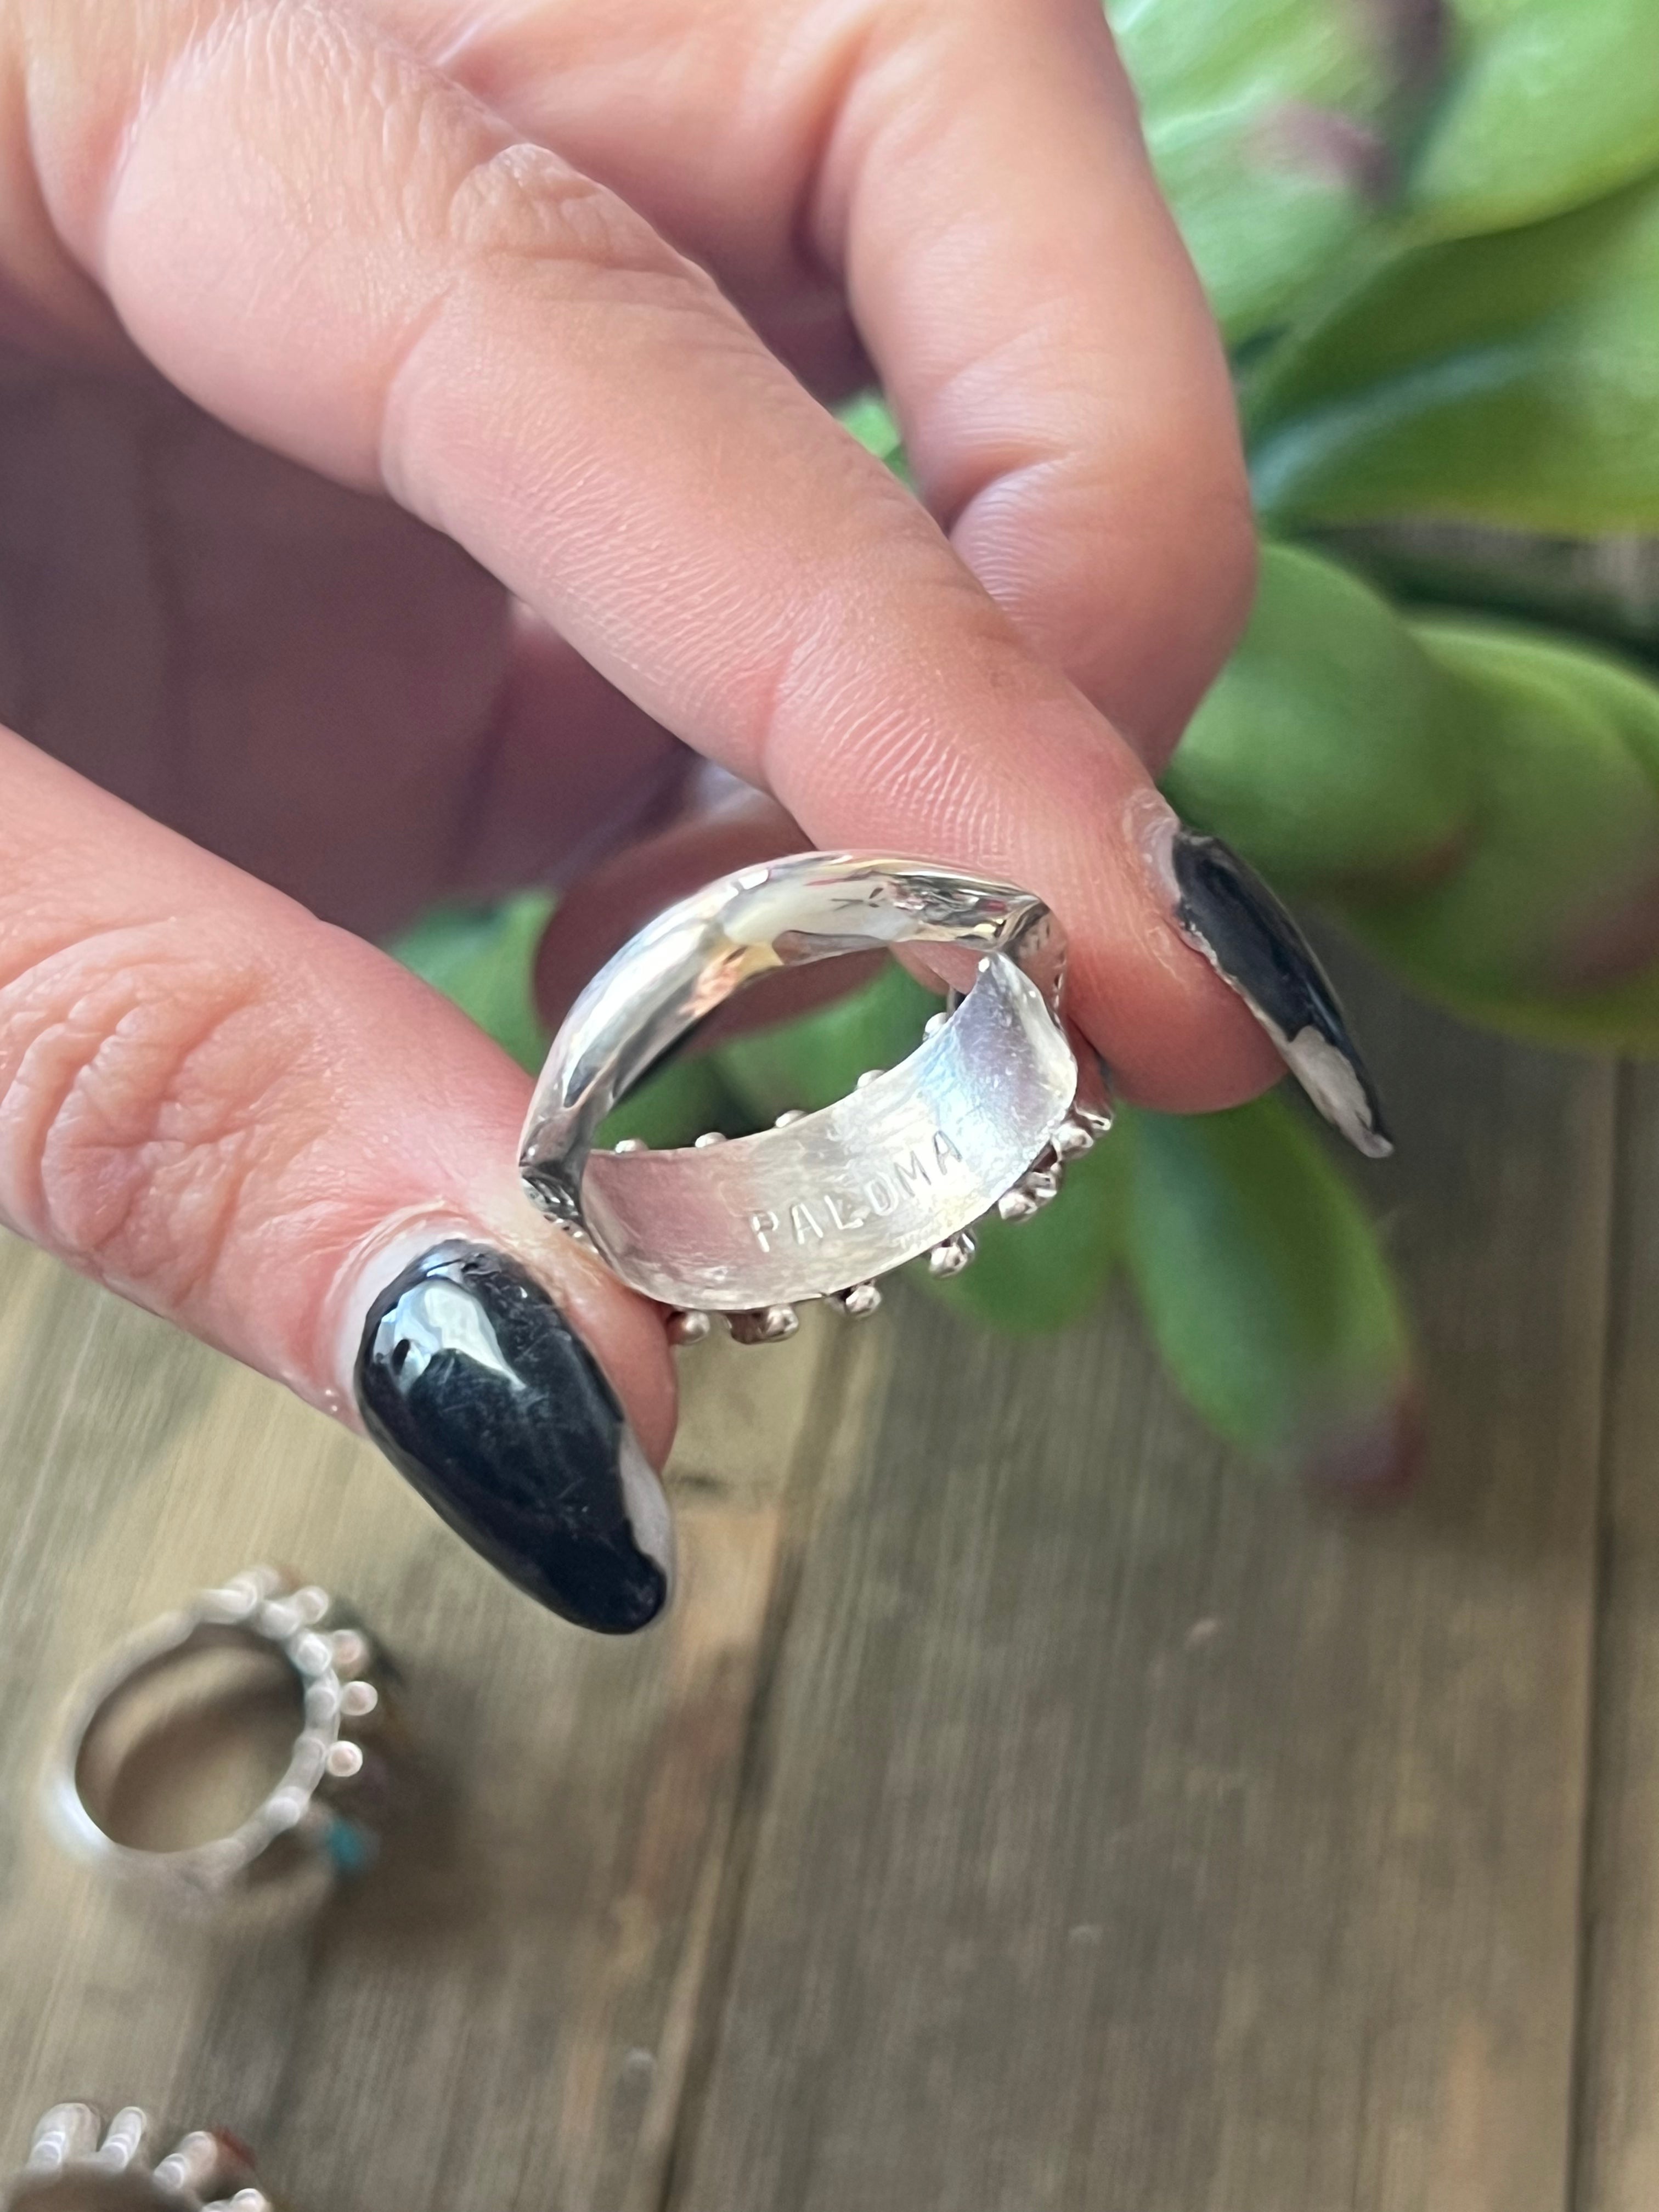 Zuni Made Multi Stone & Sterling Silver Ring